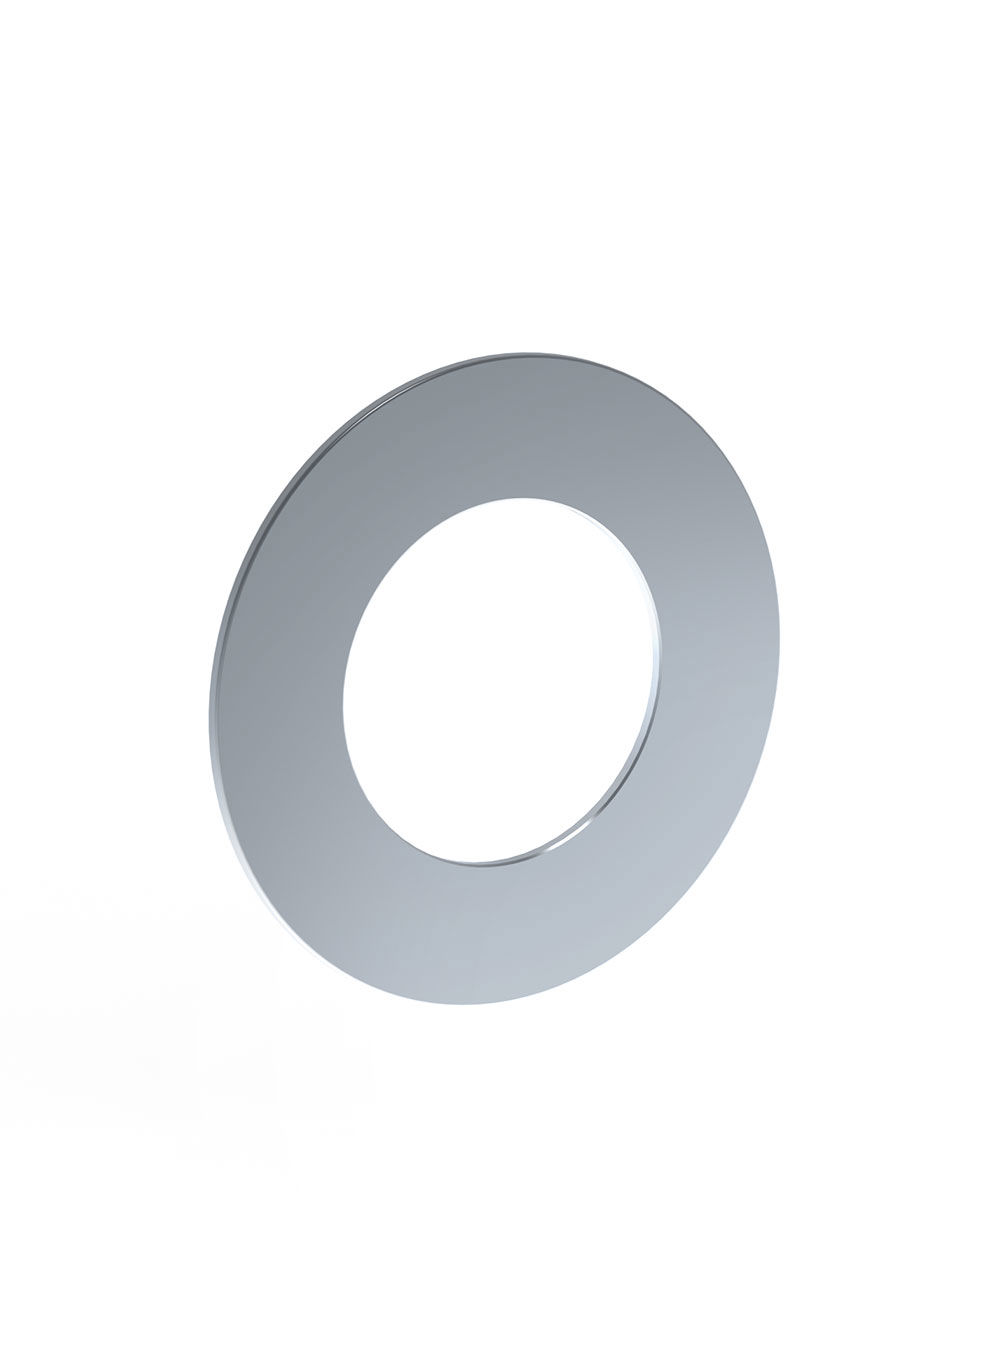 001: Rosace diamètre 60 mm. Trou diamètre 30 mm. 